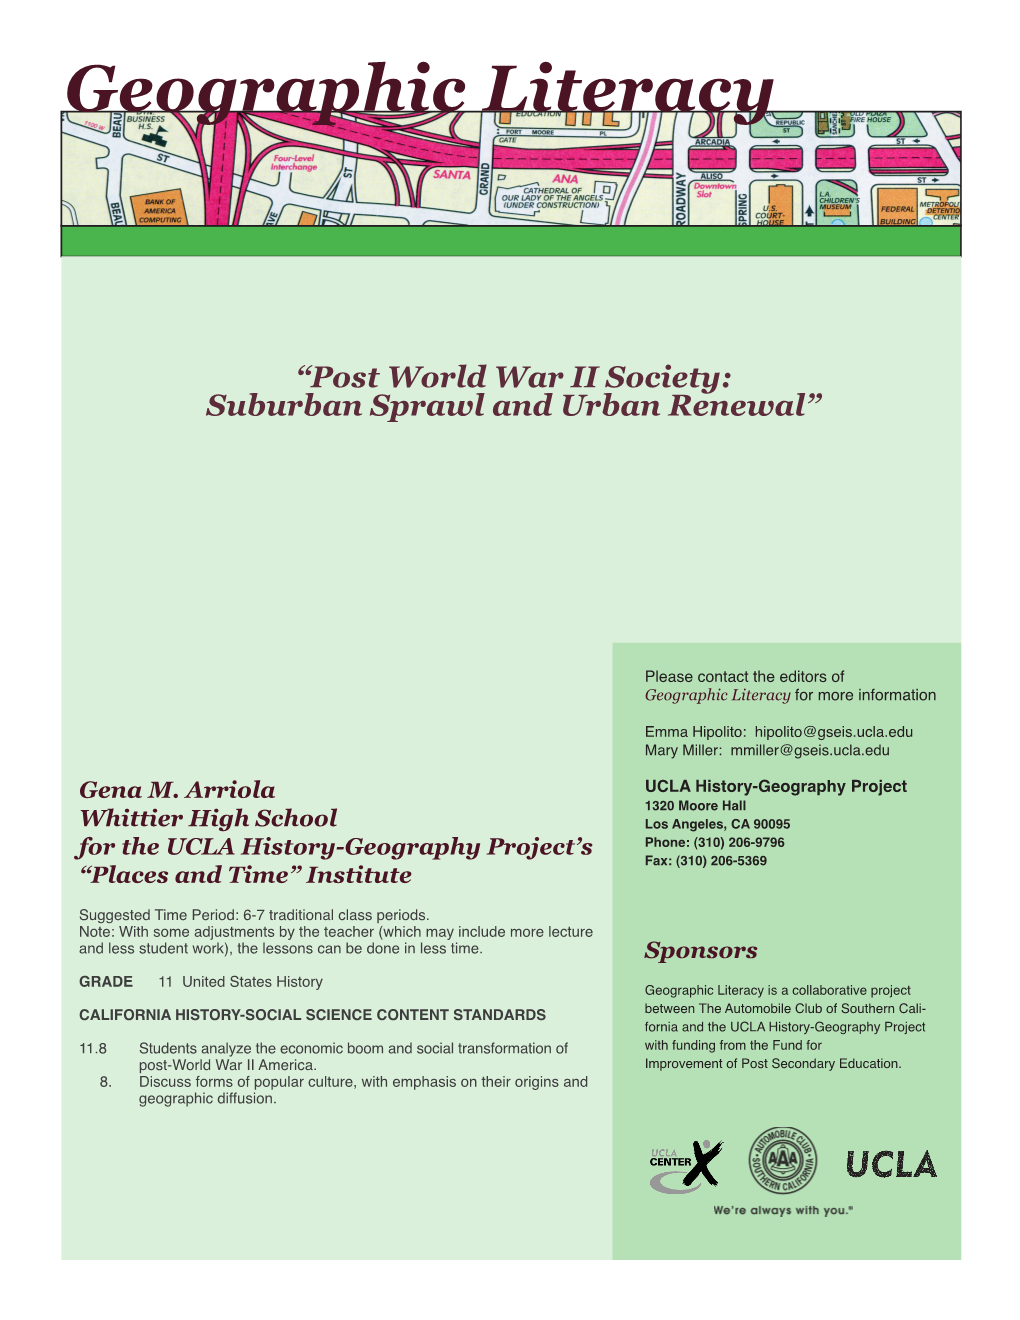 Post World War II Society: Suburban Sprawl and Urban Renewal”